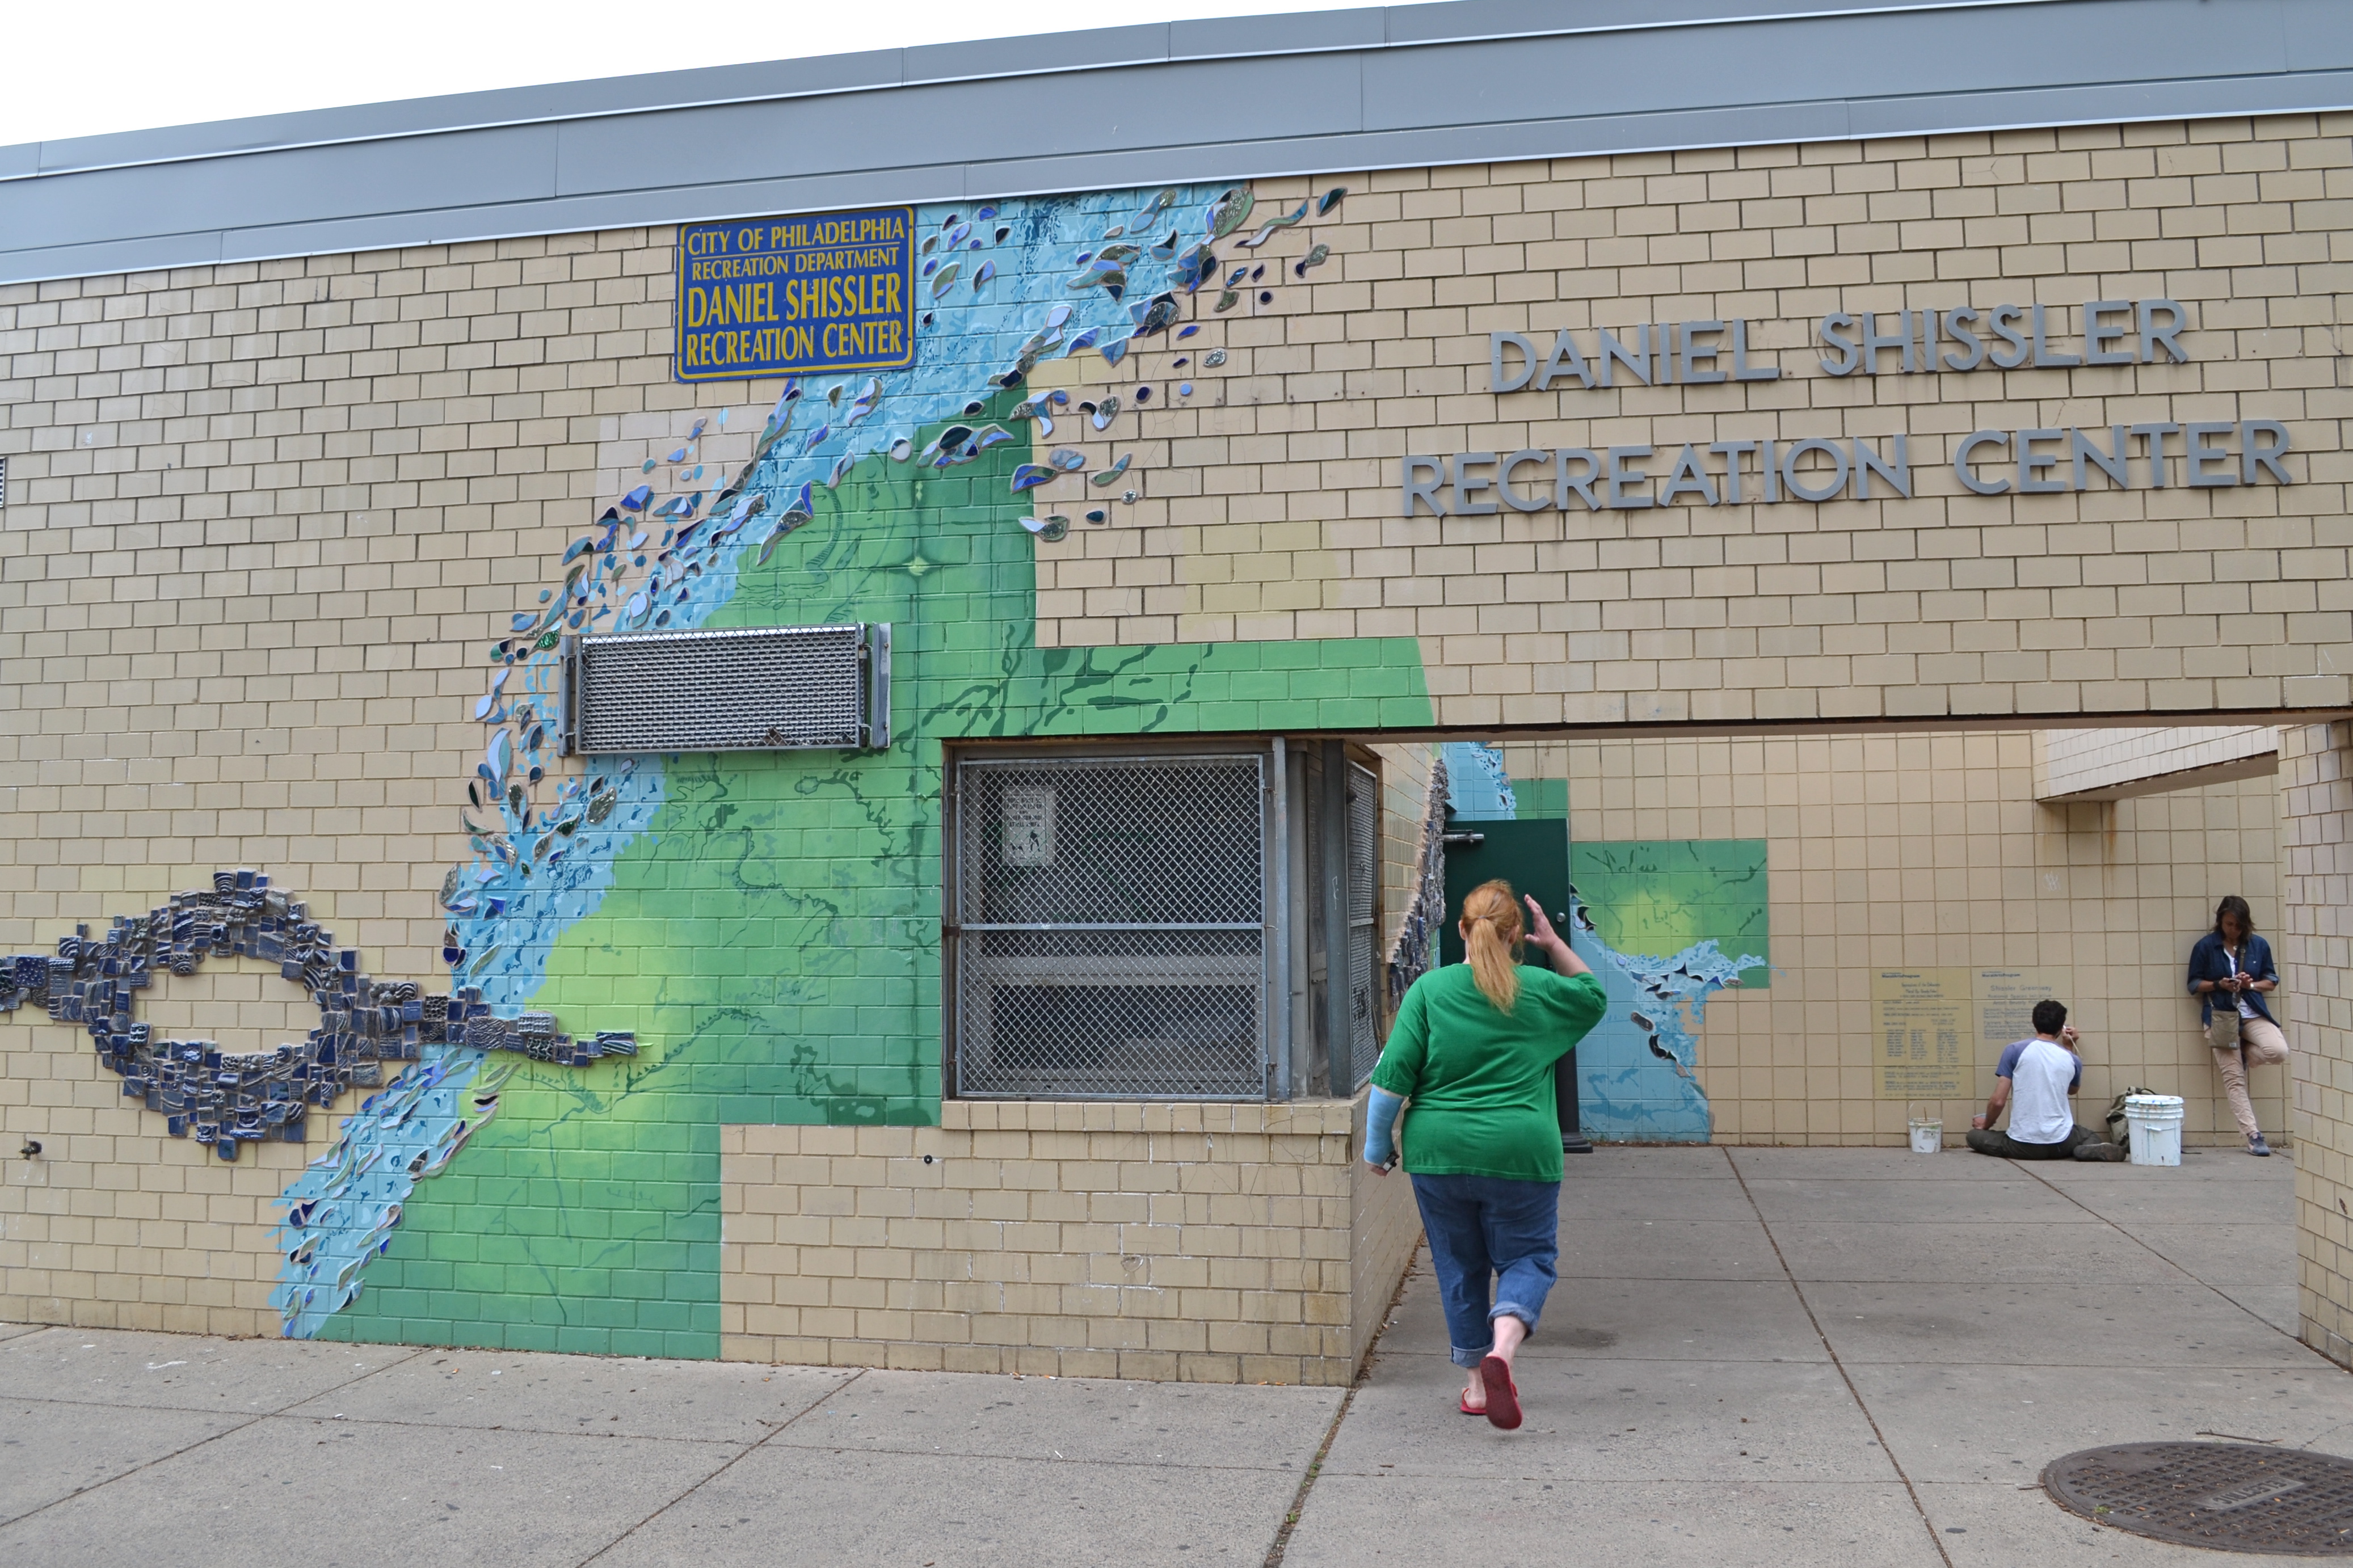 The sprayground is part of a Mural Arts Program initiative to enhance Shissler Rec Center